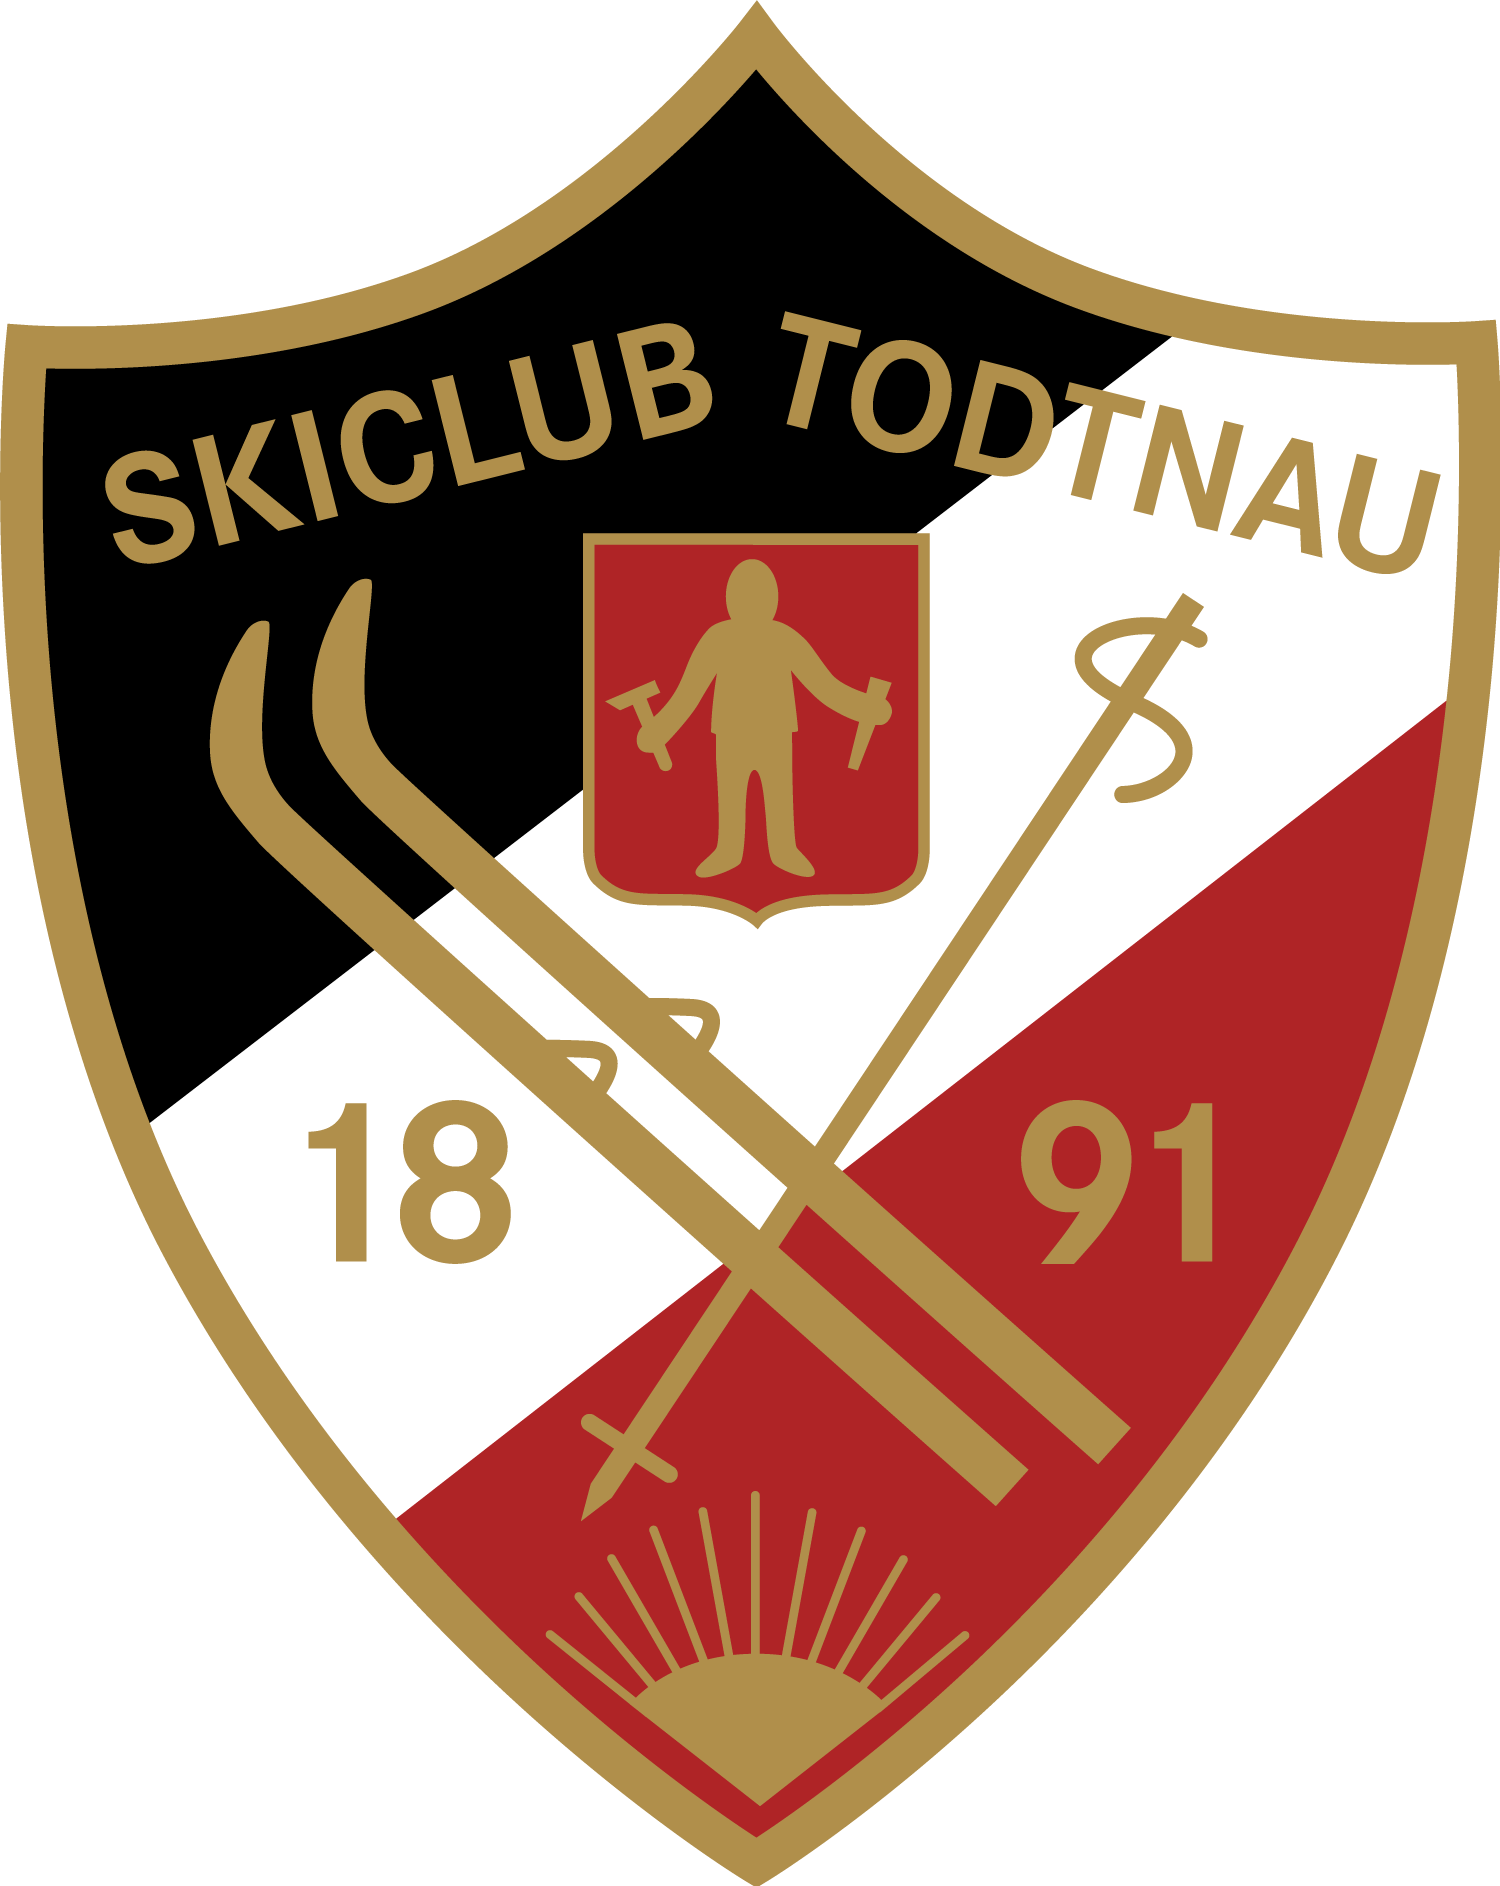 (c) Skiclub-todtnau.de